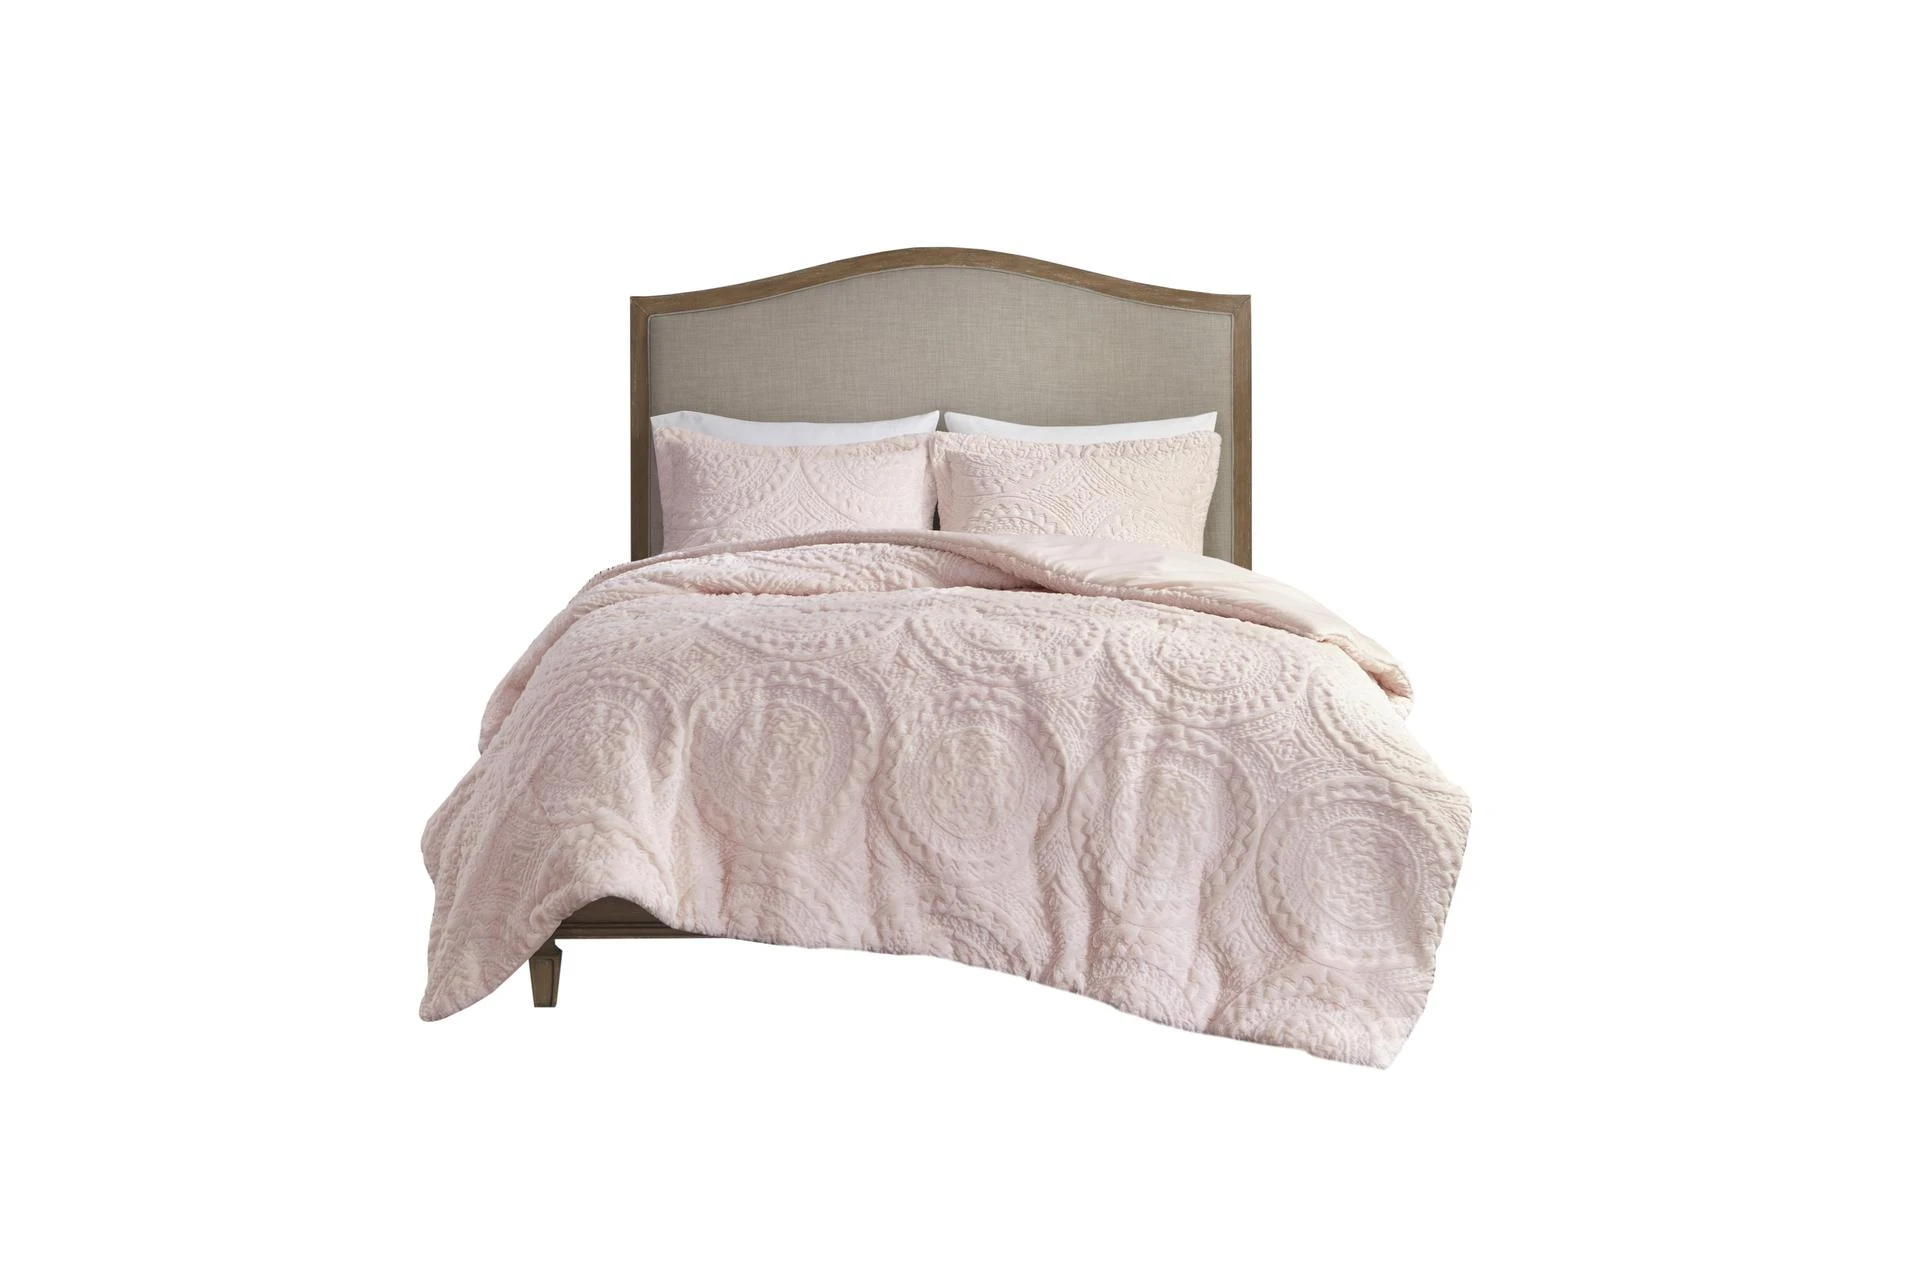 Full Queen Comforter 3 Piece Set Plush, Does A Queen Duvet Cover Fit Full